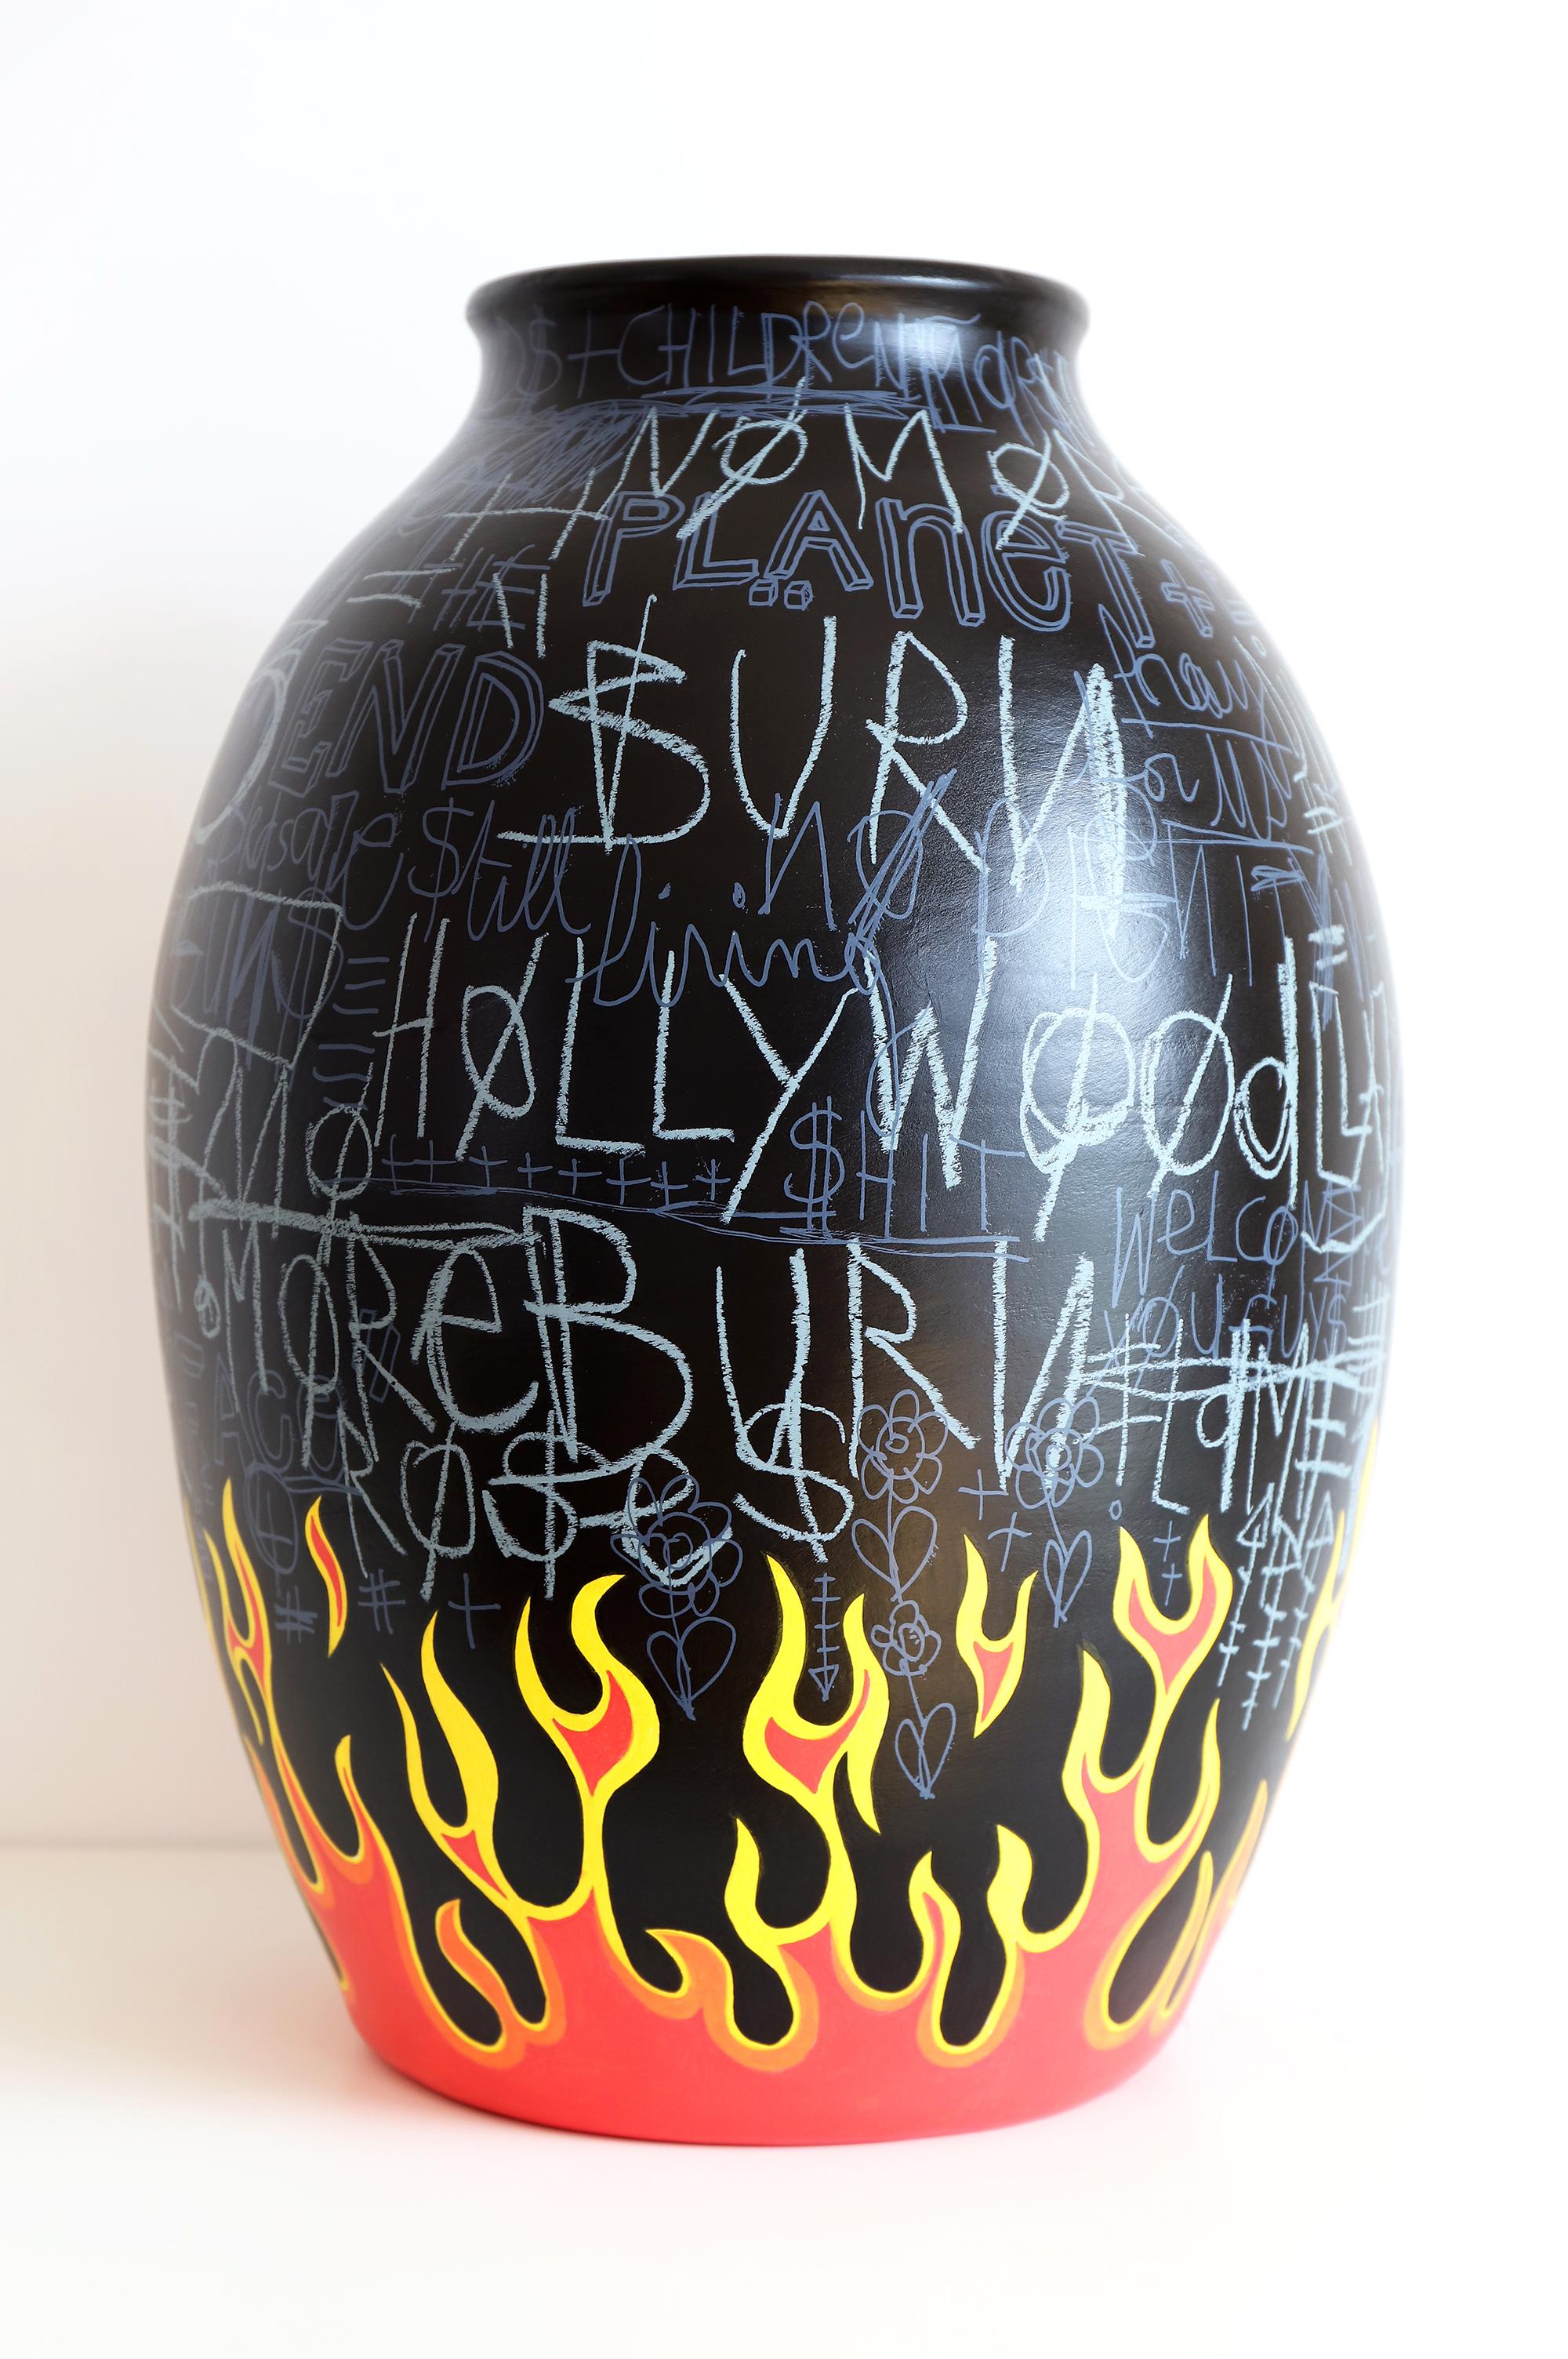 Burn Hollywood Burn - Black Abstract Sculpture by Grégoire Devin